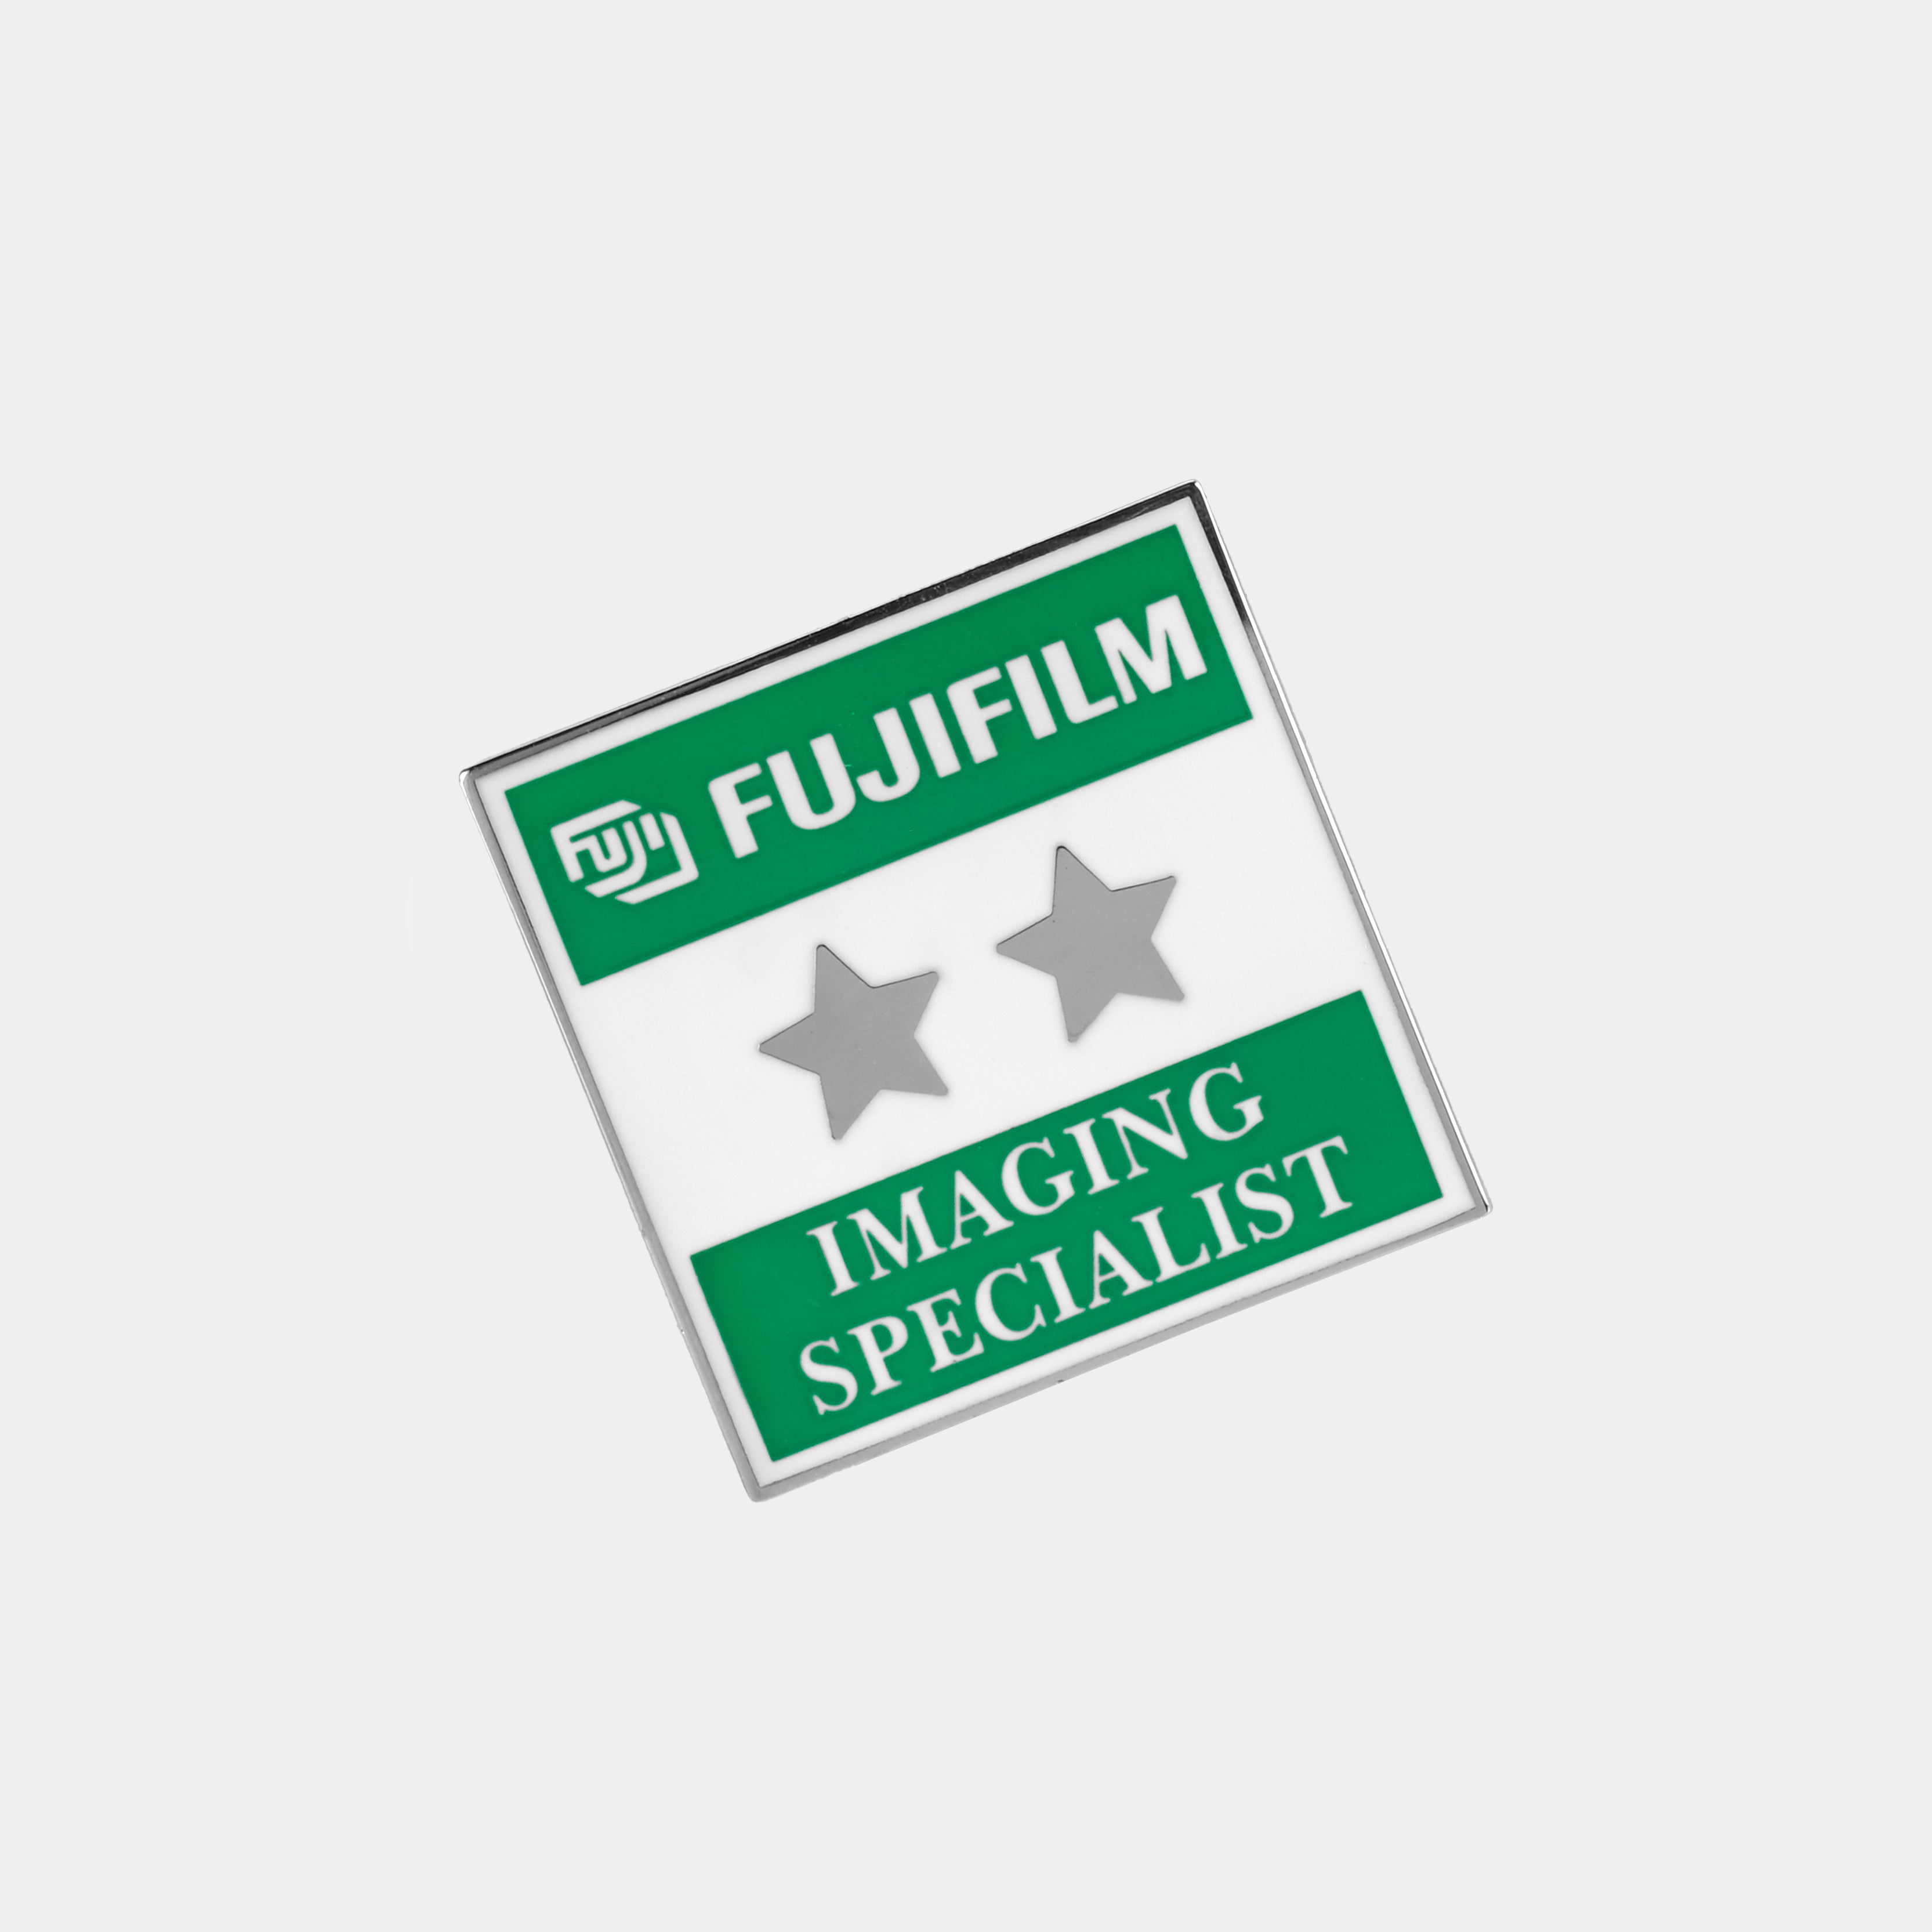 Fujifilm 2-Star Imaging Specialist Vintage Enamel Pin